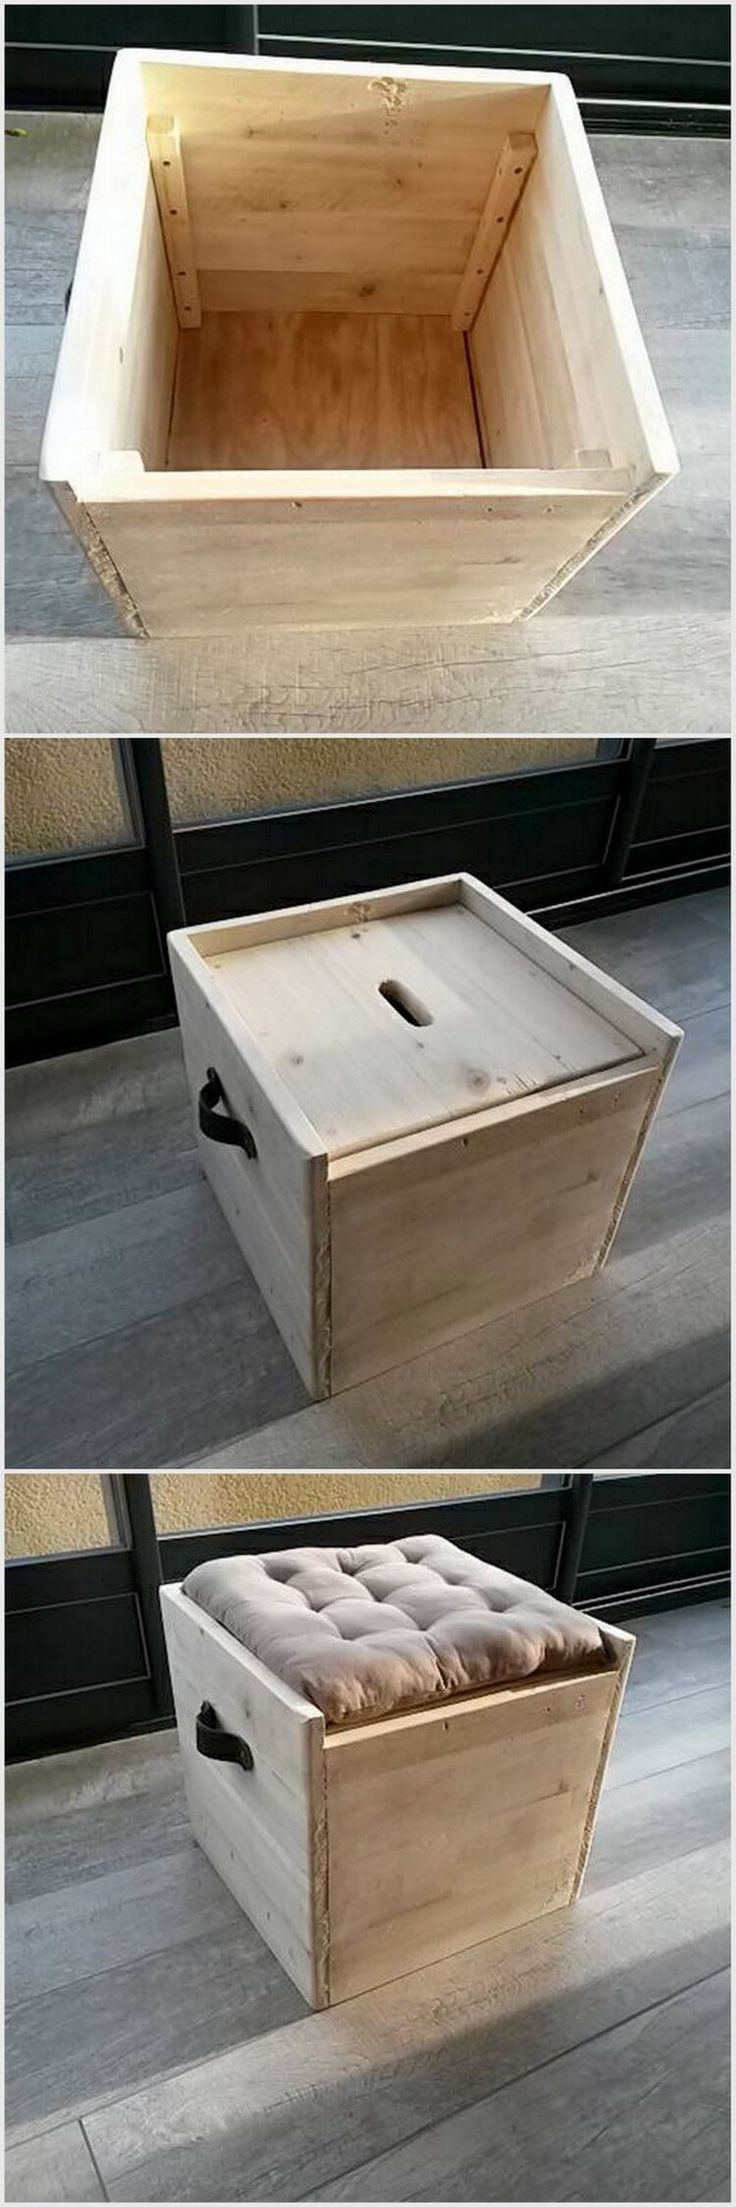 DIY Wood Storage Boxes
 Best 25 Wood storage box ideas on Pinterest